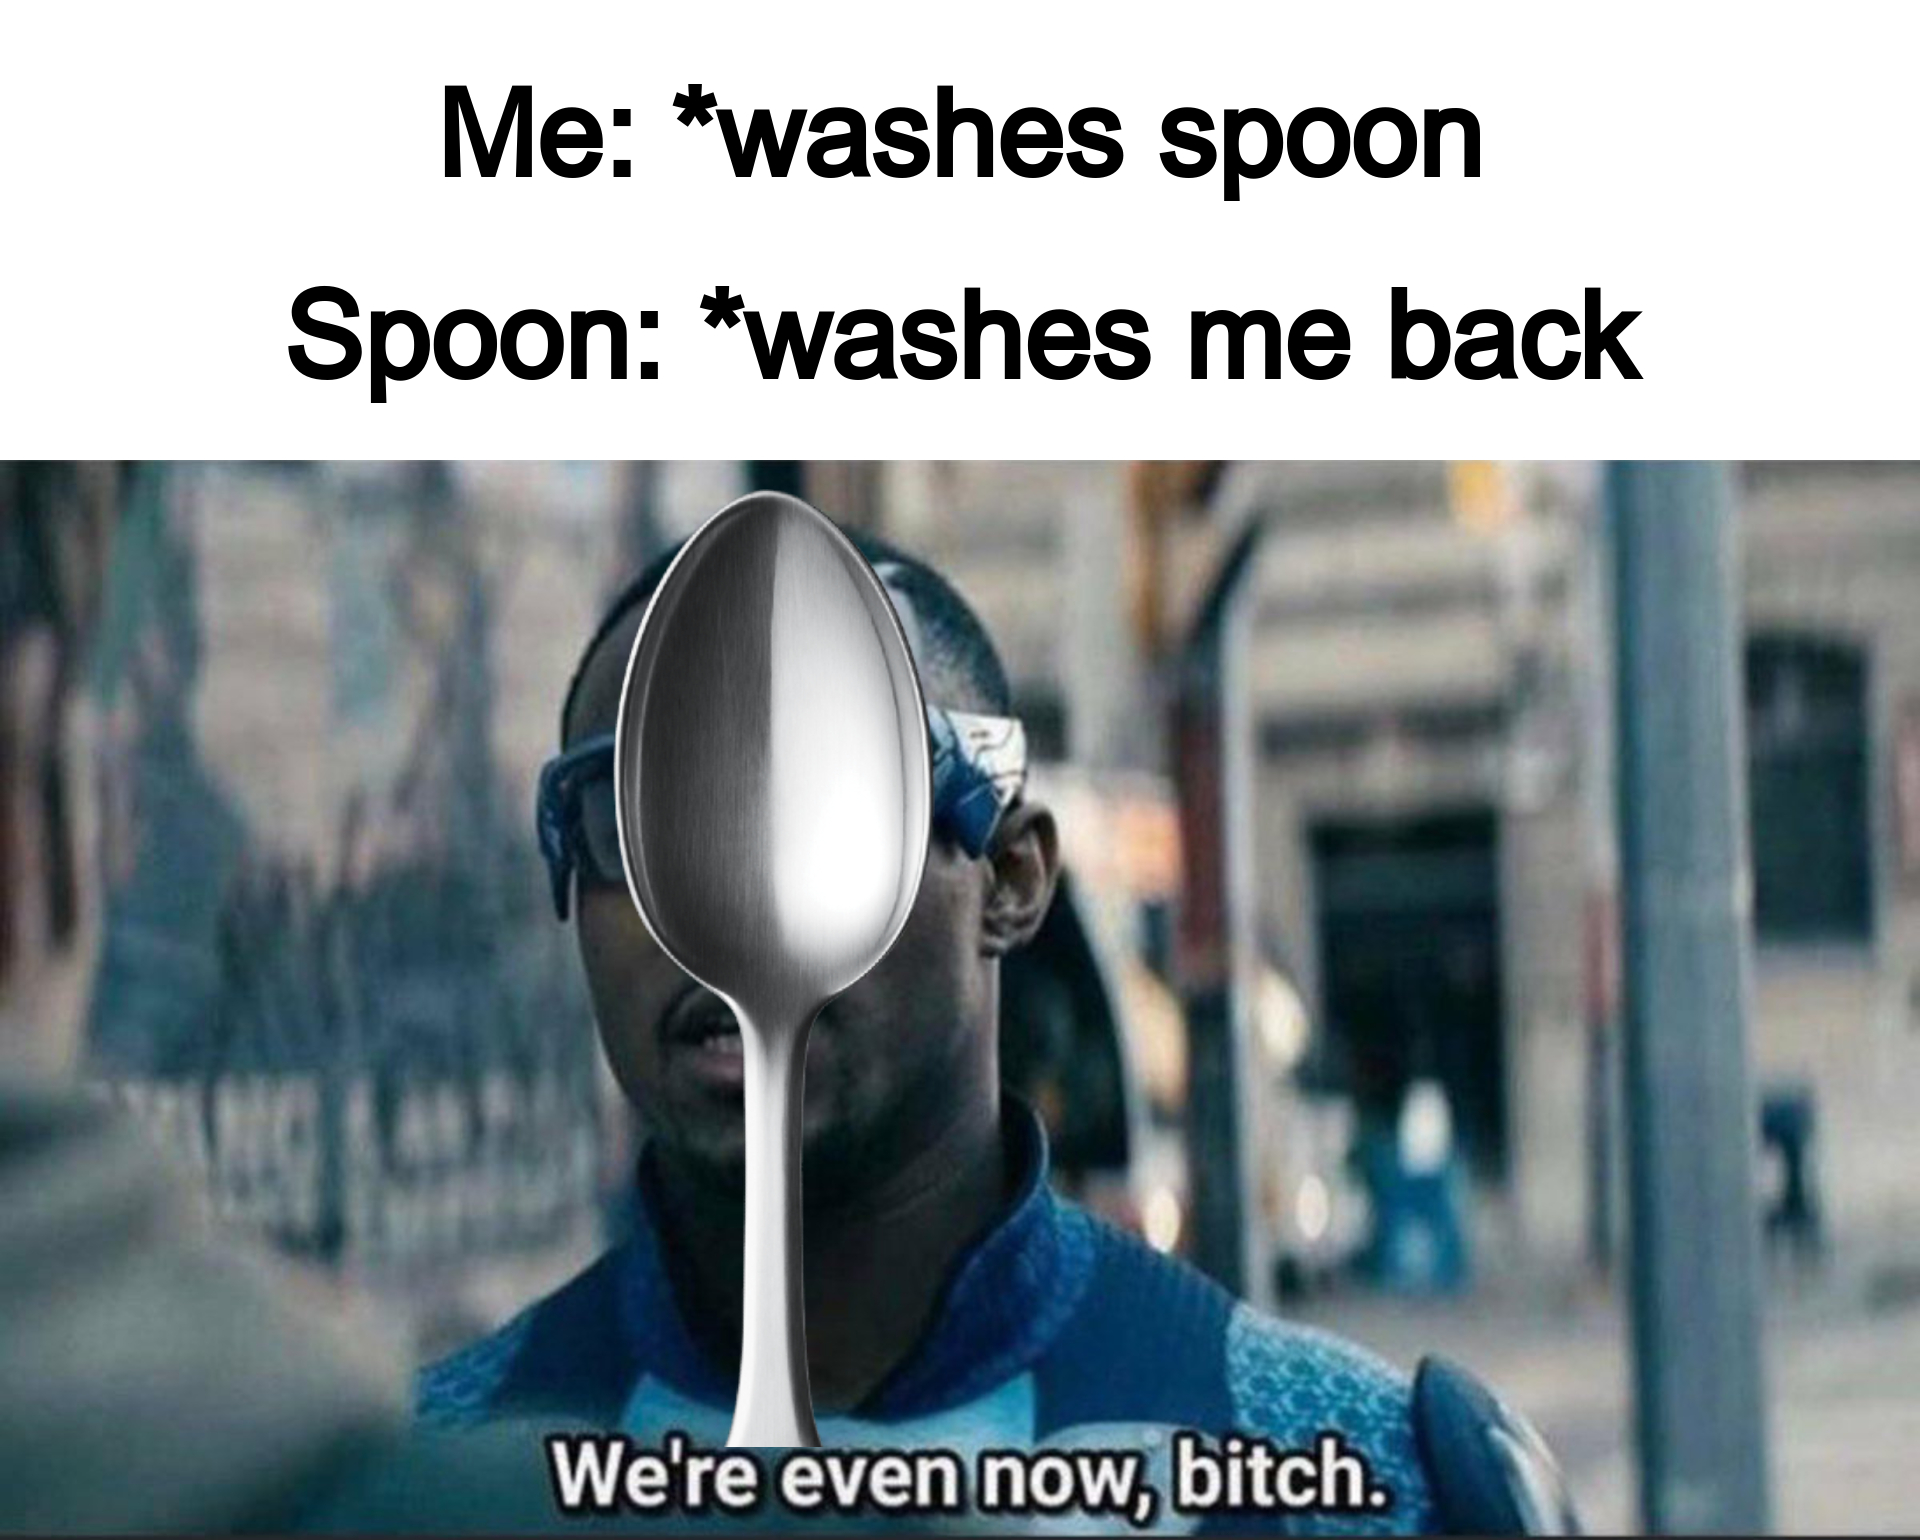 Spoons always get the last laugh